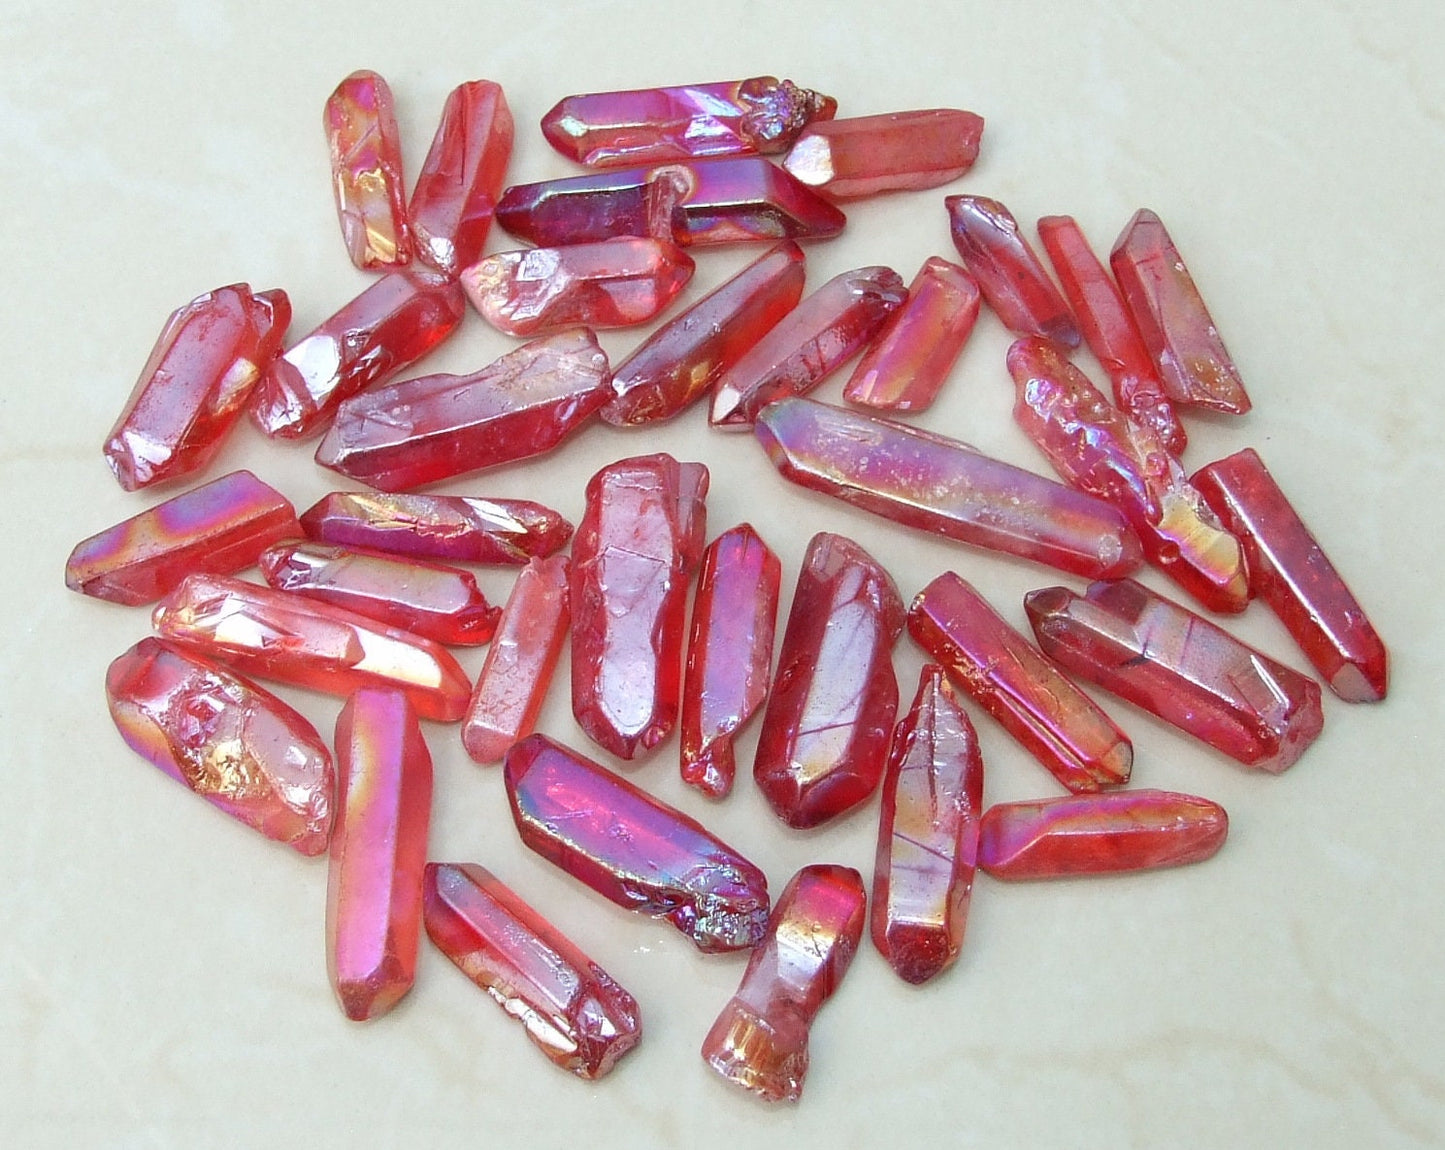 10 Lightly Polished Undrilled Angel Aura AB Quartz Crystals Points, Titanium Quartz, Gemstone Beads, Pendant, Wand, Healing Quartz, 25-40mm